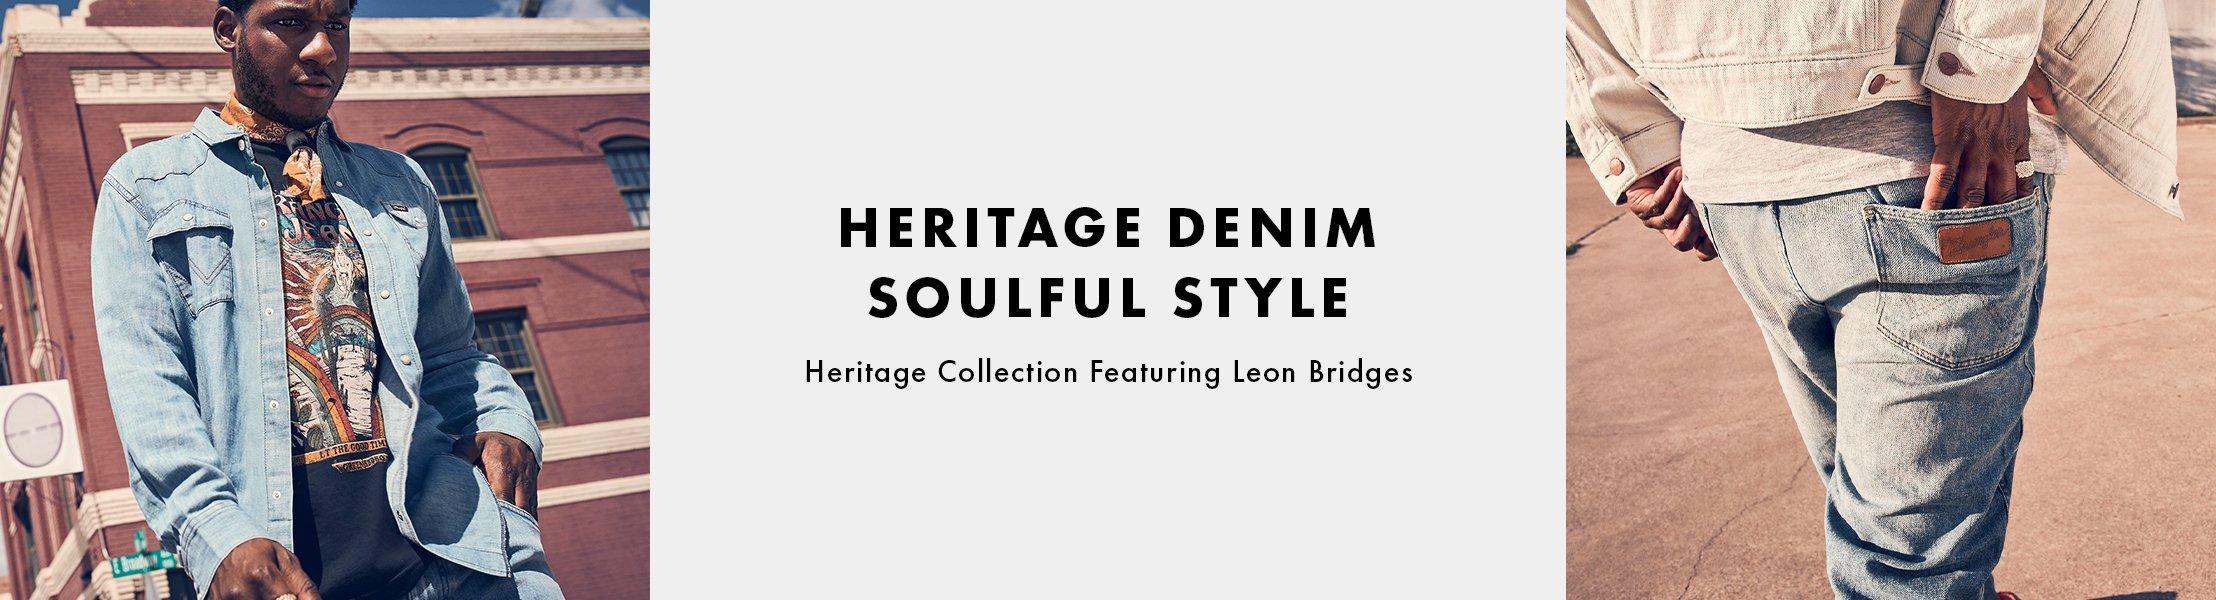 Heritage Collection featuring Leon Bridges